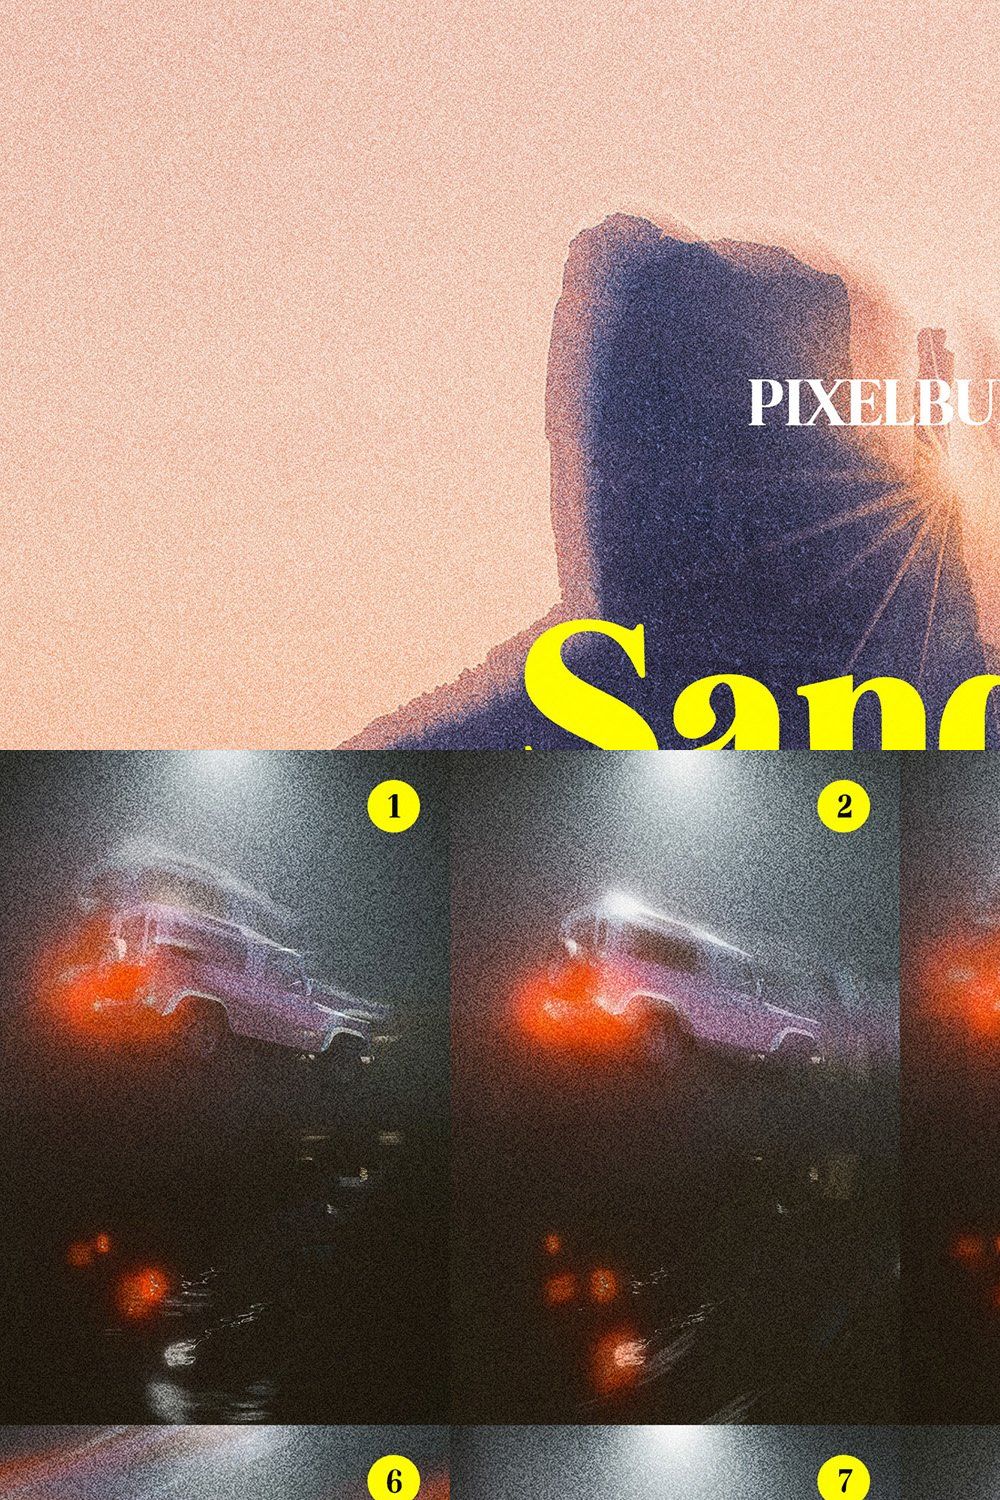 Sandstorm Disrupted Photoshop Effect pinterest preview image.